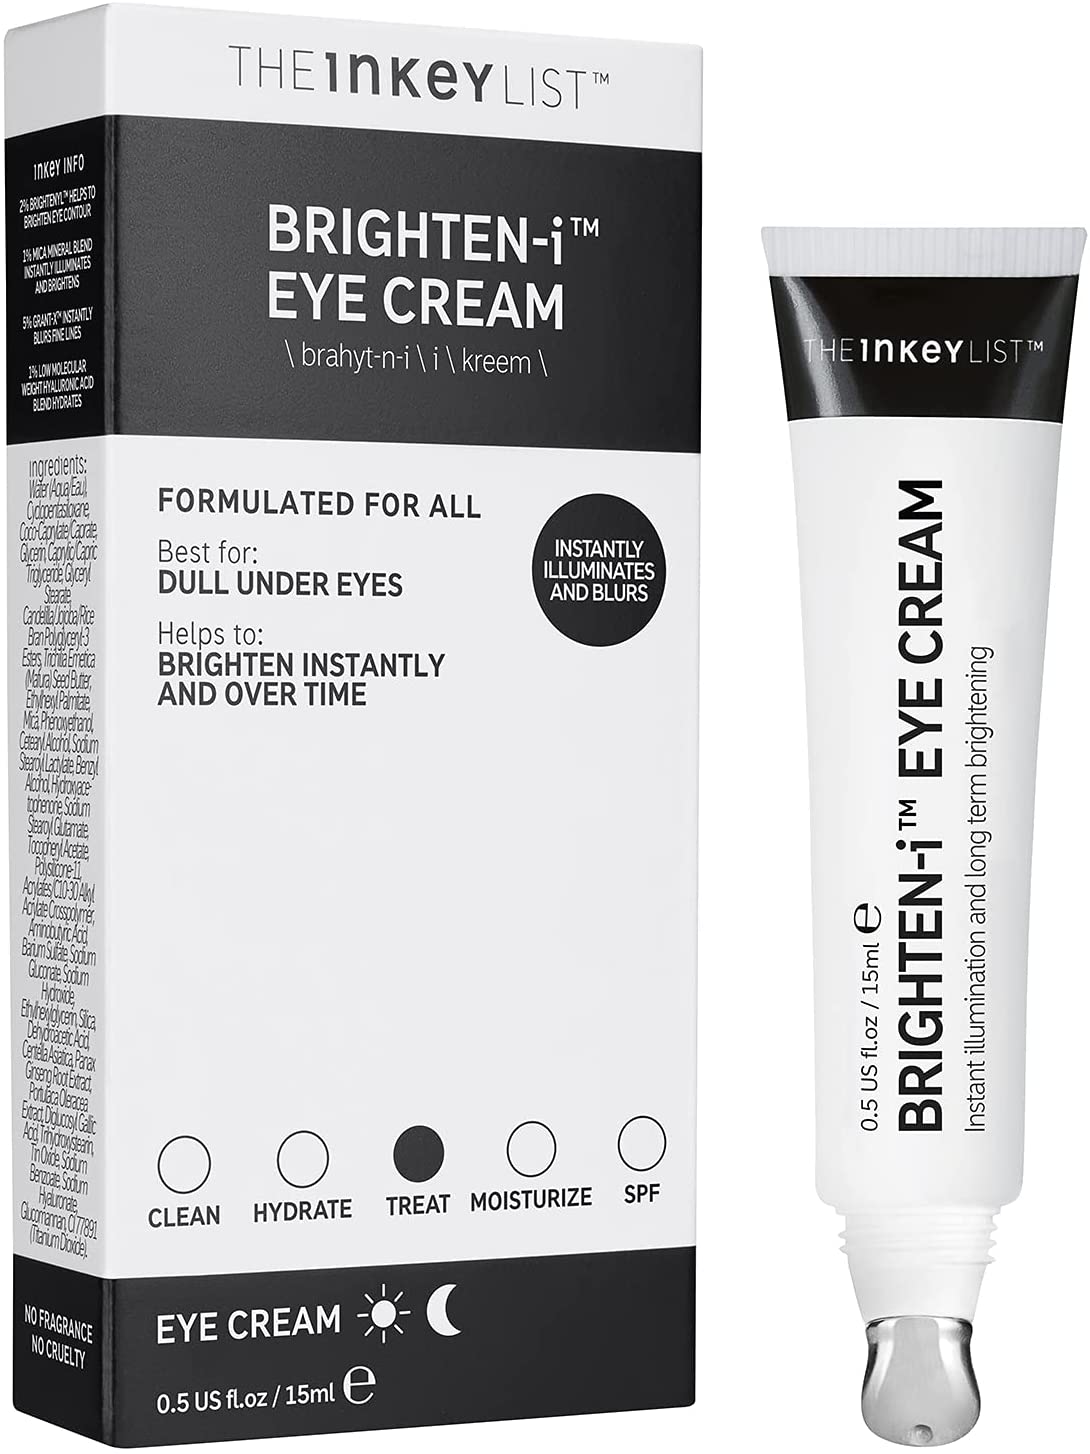 Brighten-i Eye Cream